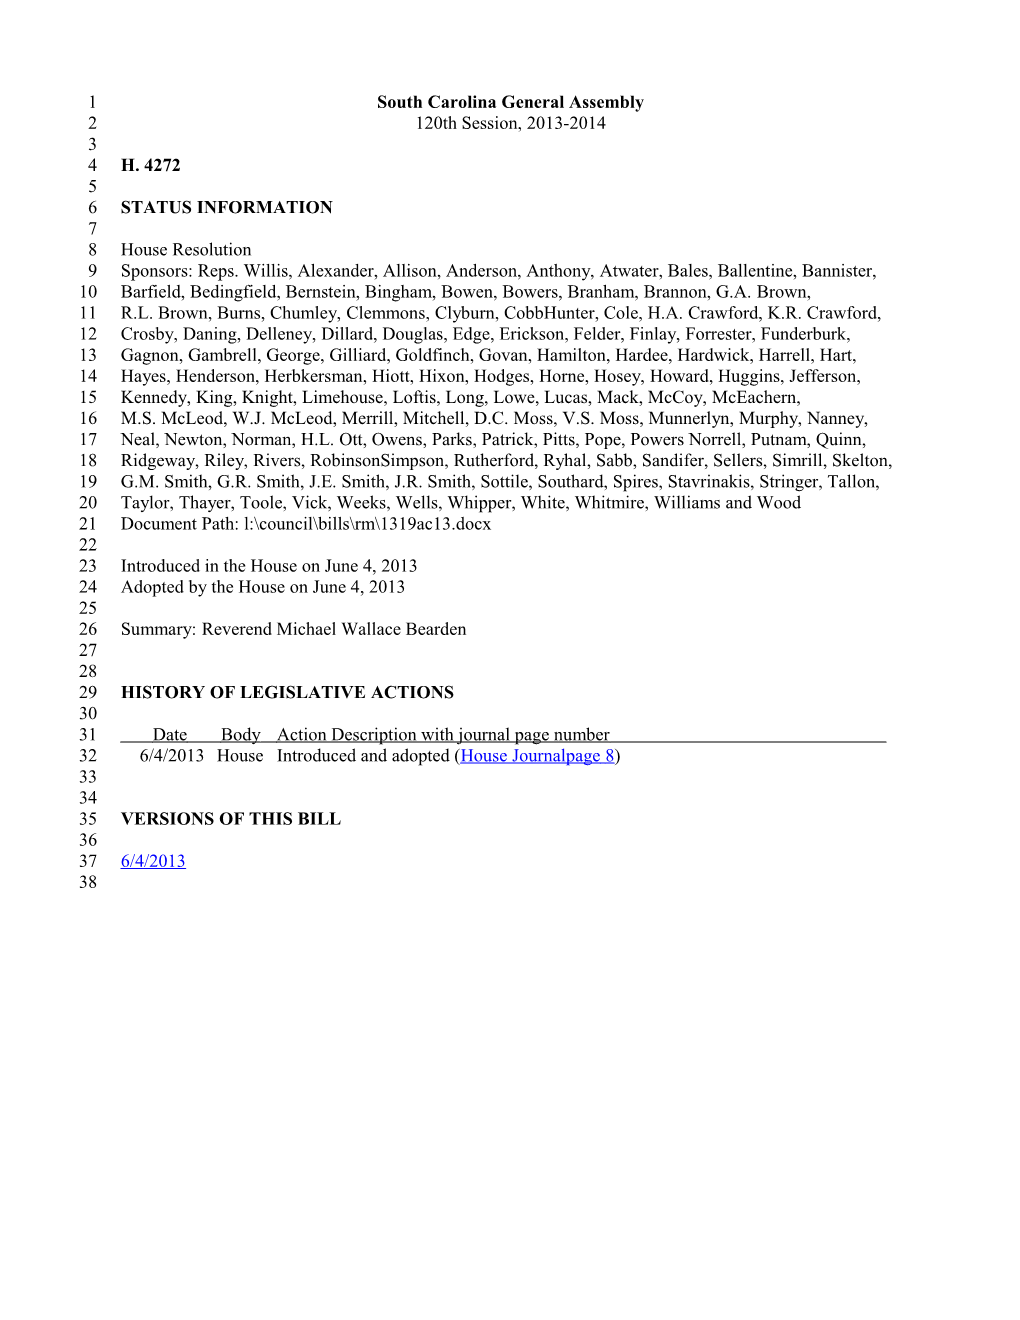 2013-2014 Bill 4272: Reverend Michael Wallace Bearden - South Carolina Legislature Online